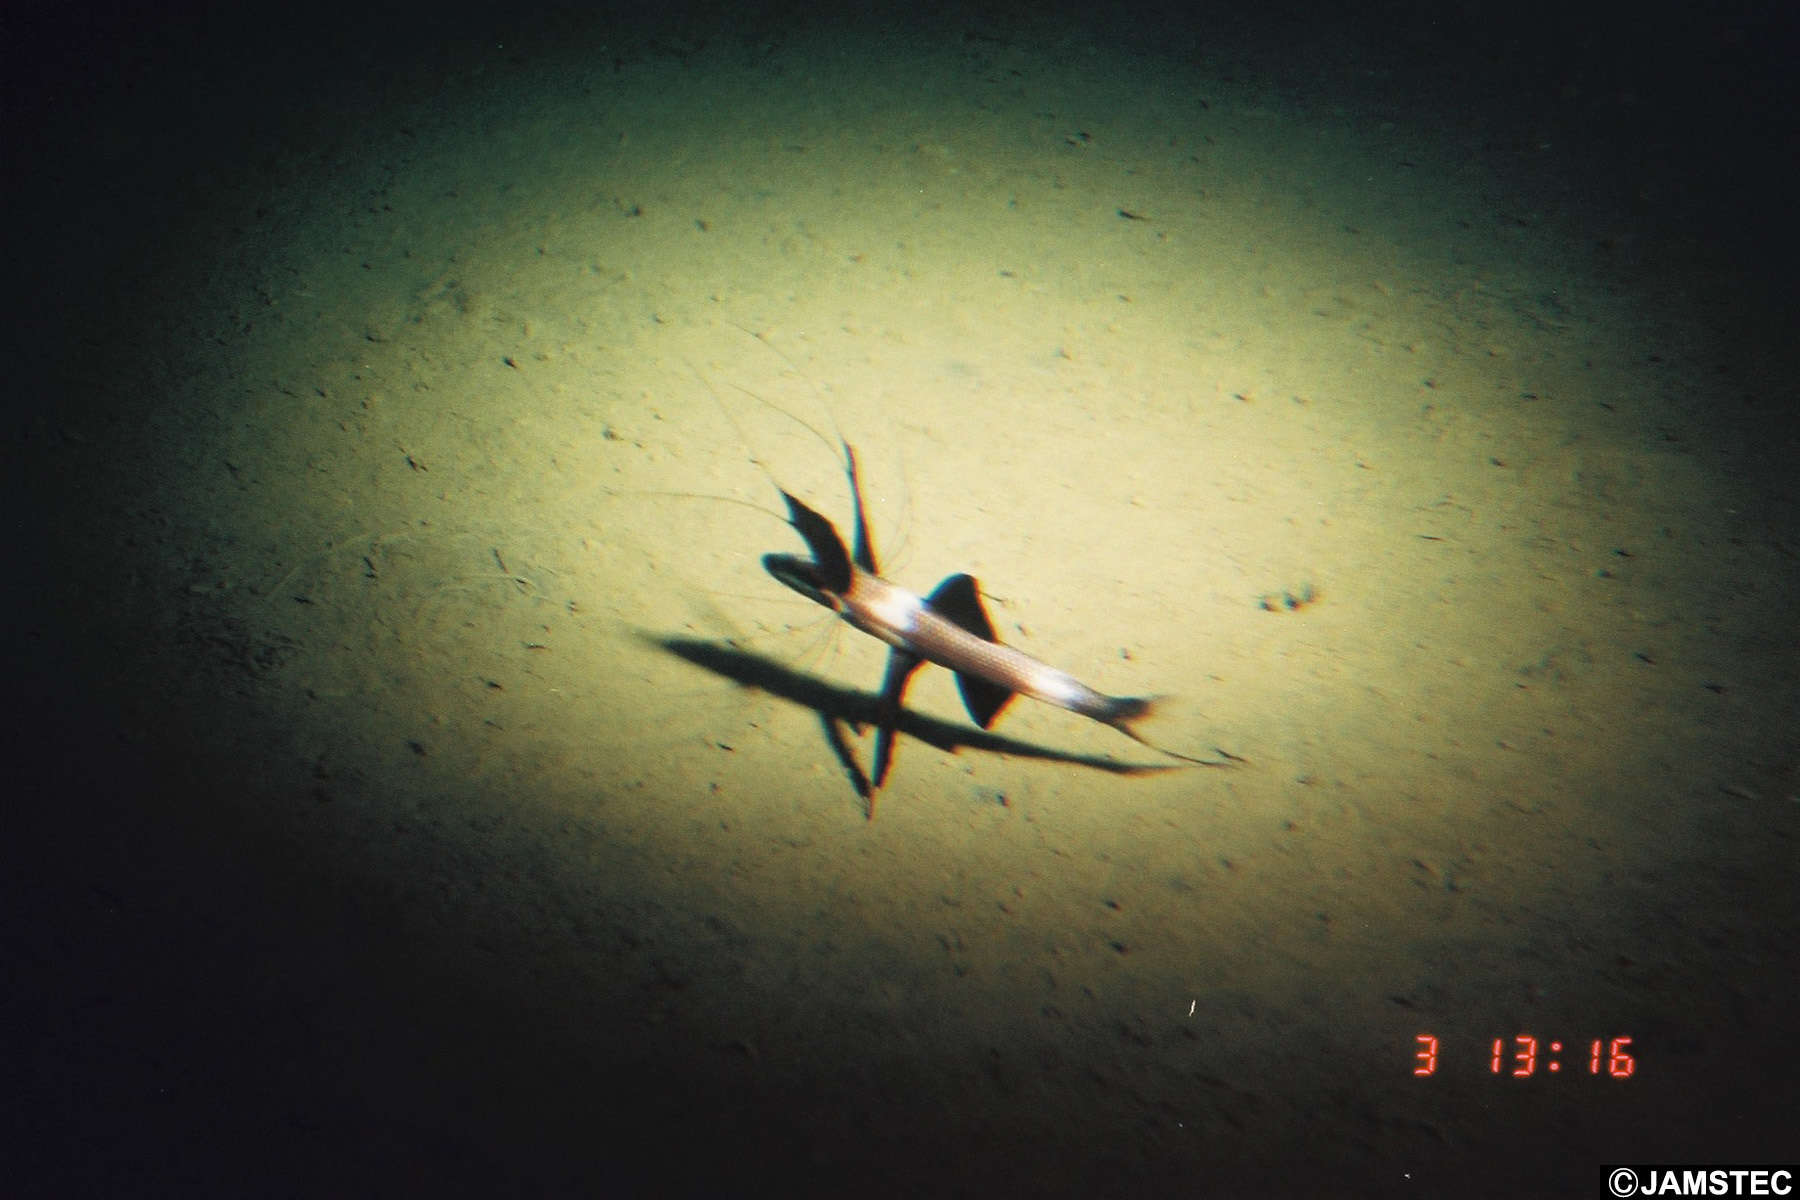 Image of Tribute spiderfish